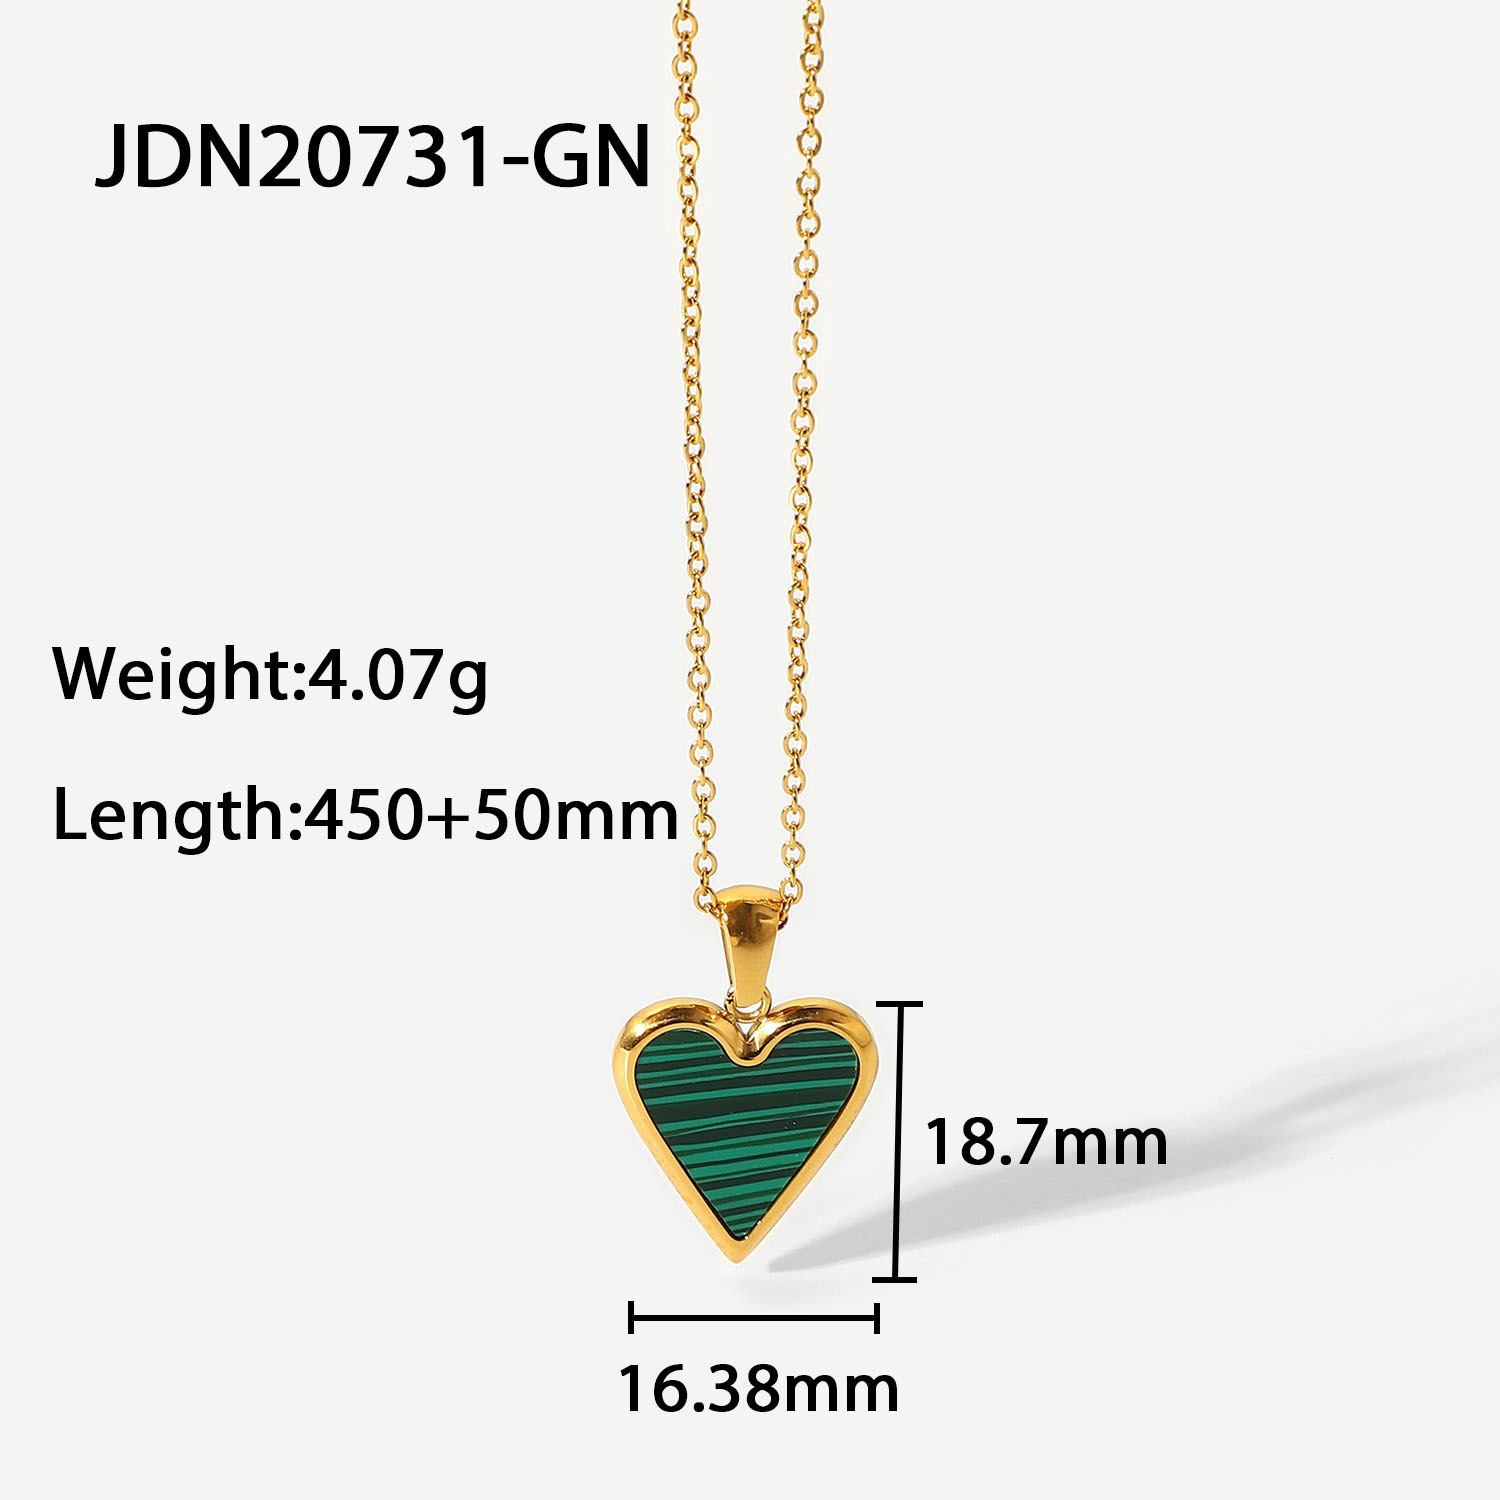 JDN20731-GN